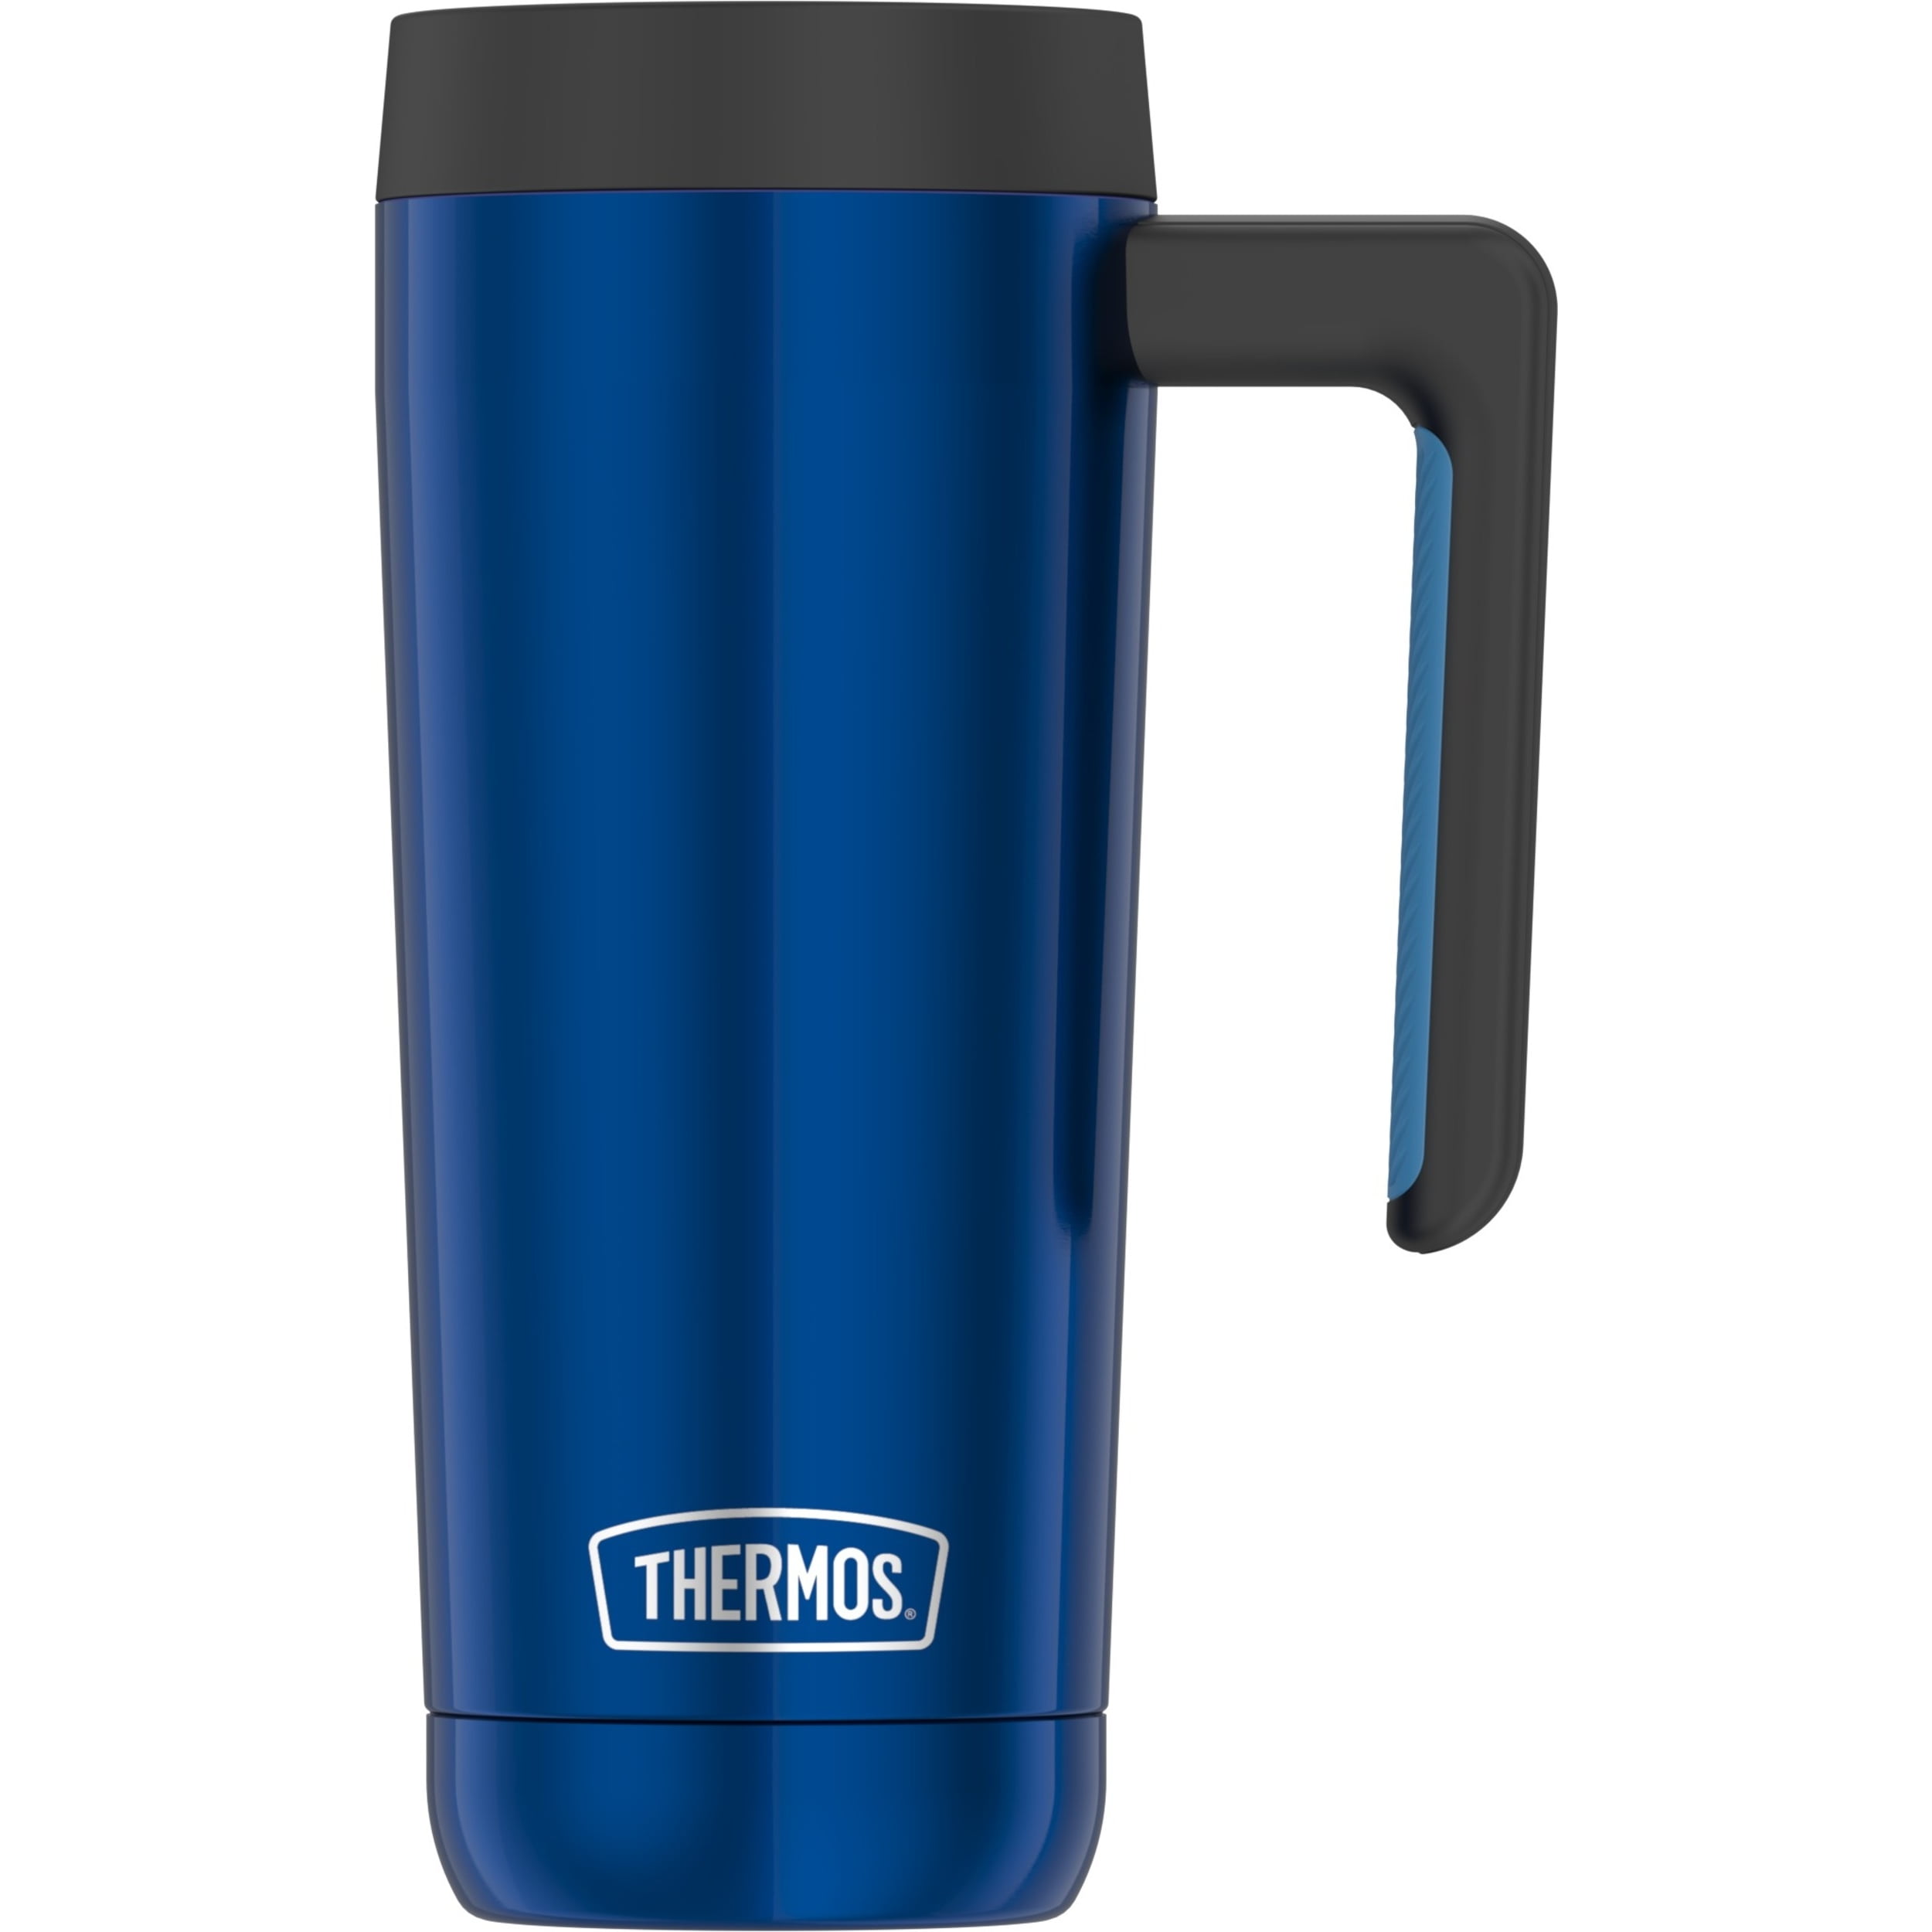 Thermos Travel Mug, 18 Ounce